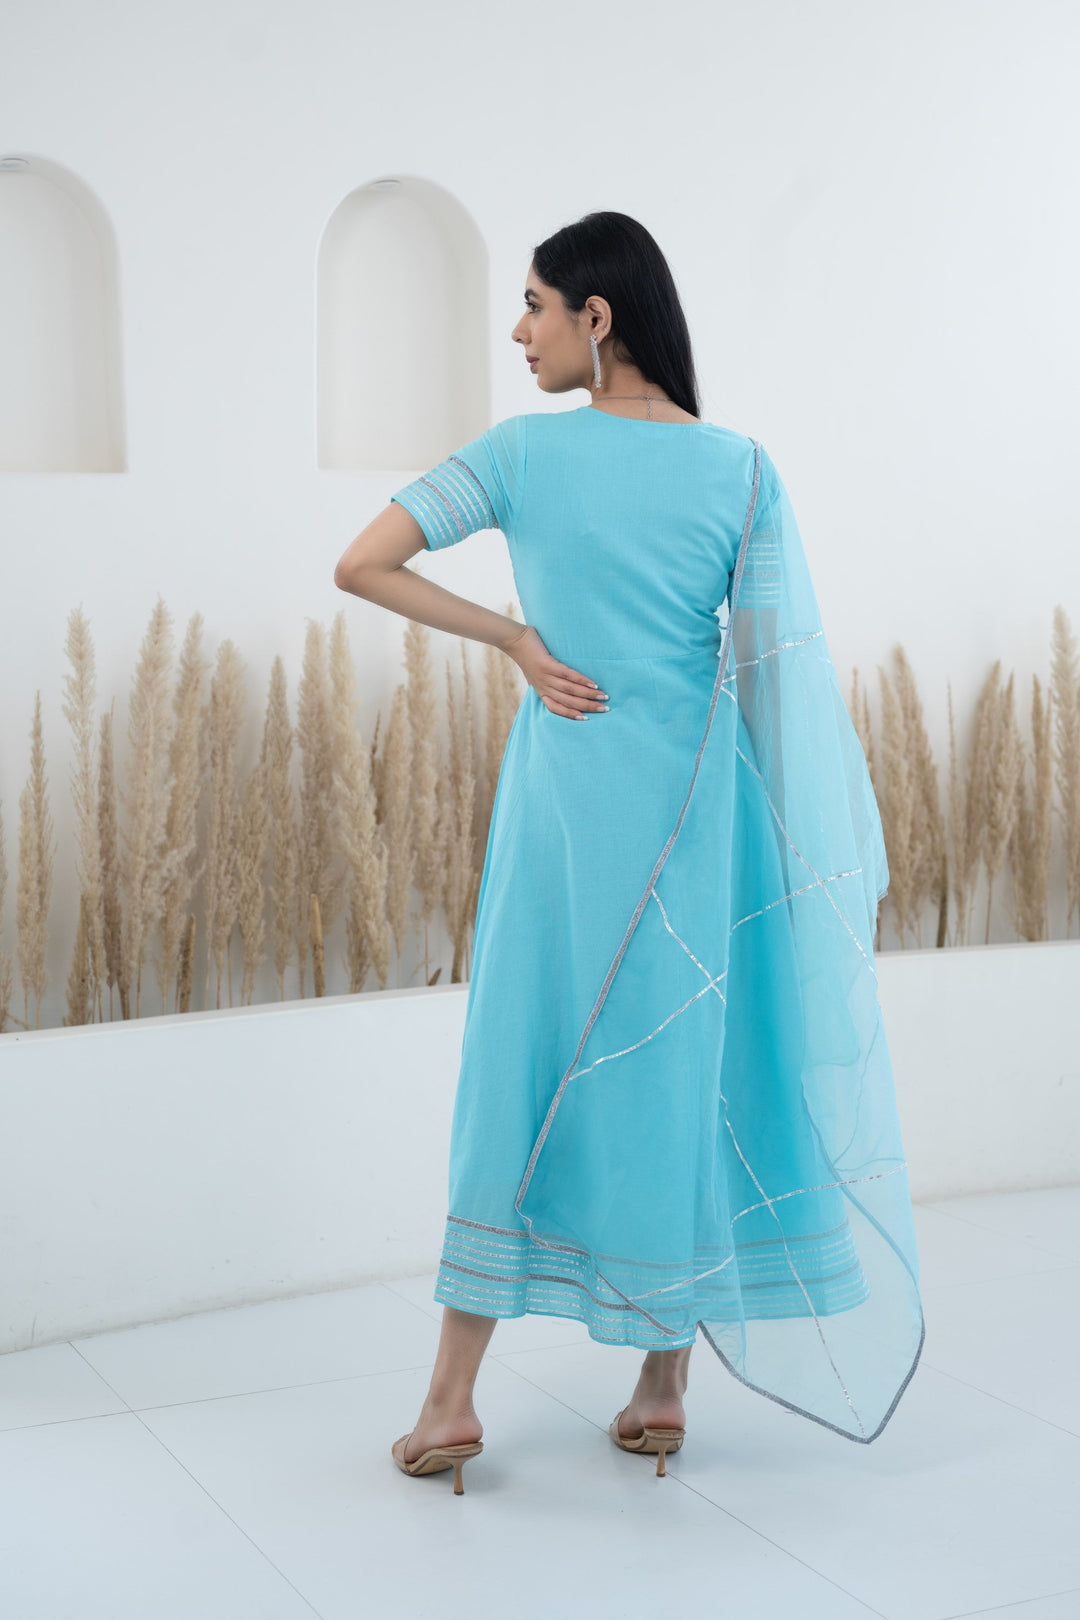 Women's Blue Anarkali Gown with Dupatta by Myshka- 2 pc set